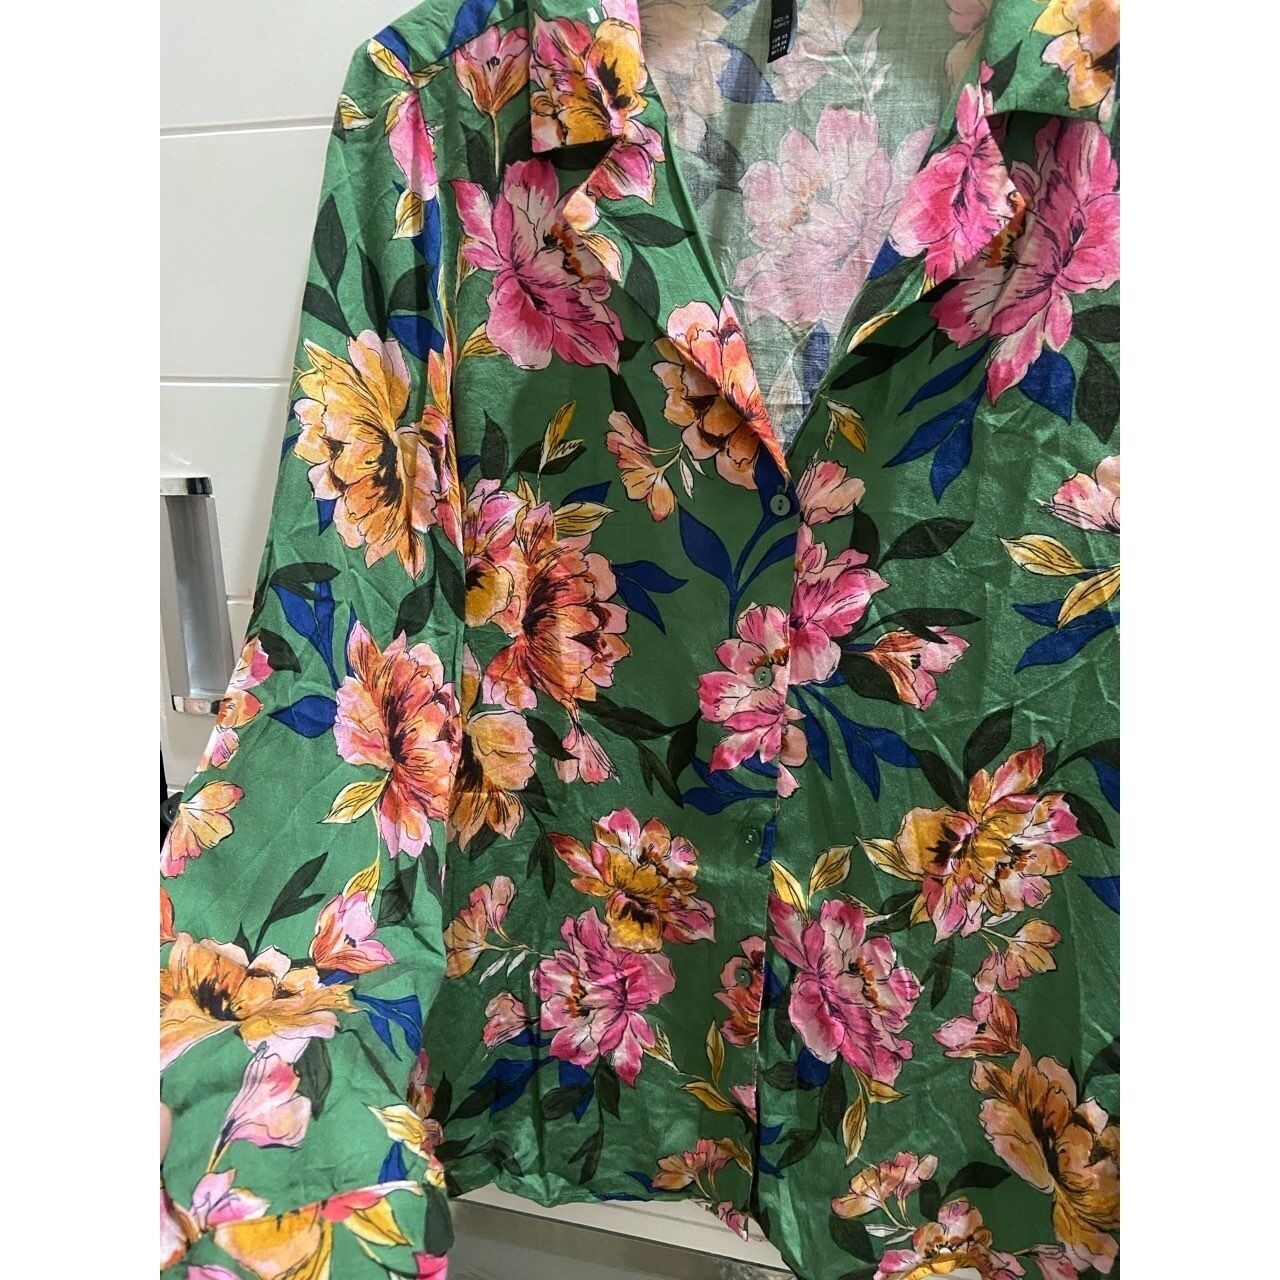 Zara Floral Printed Shirt